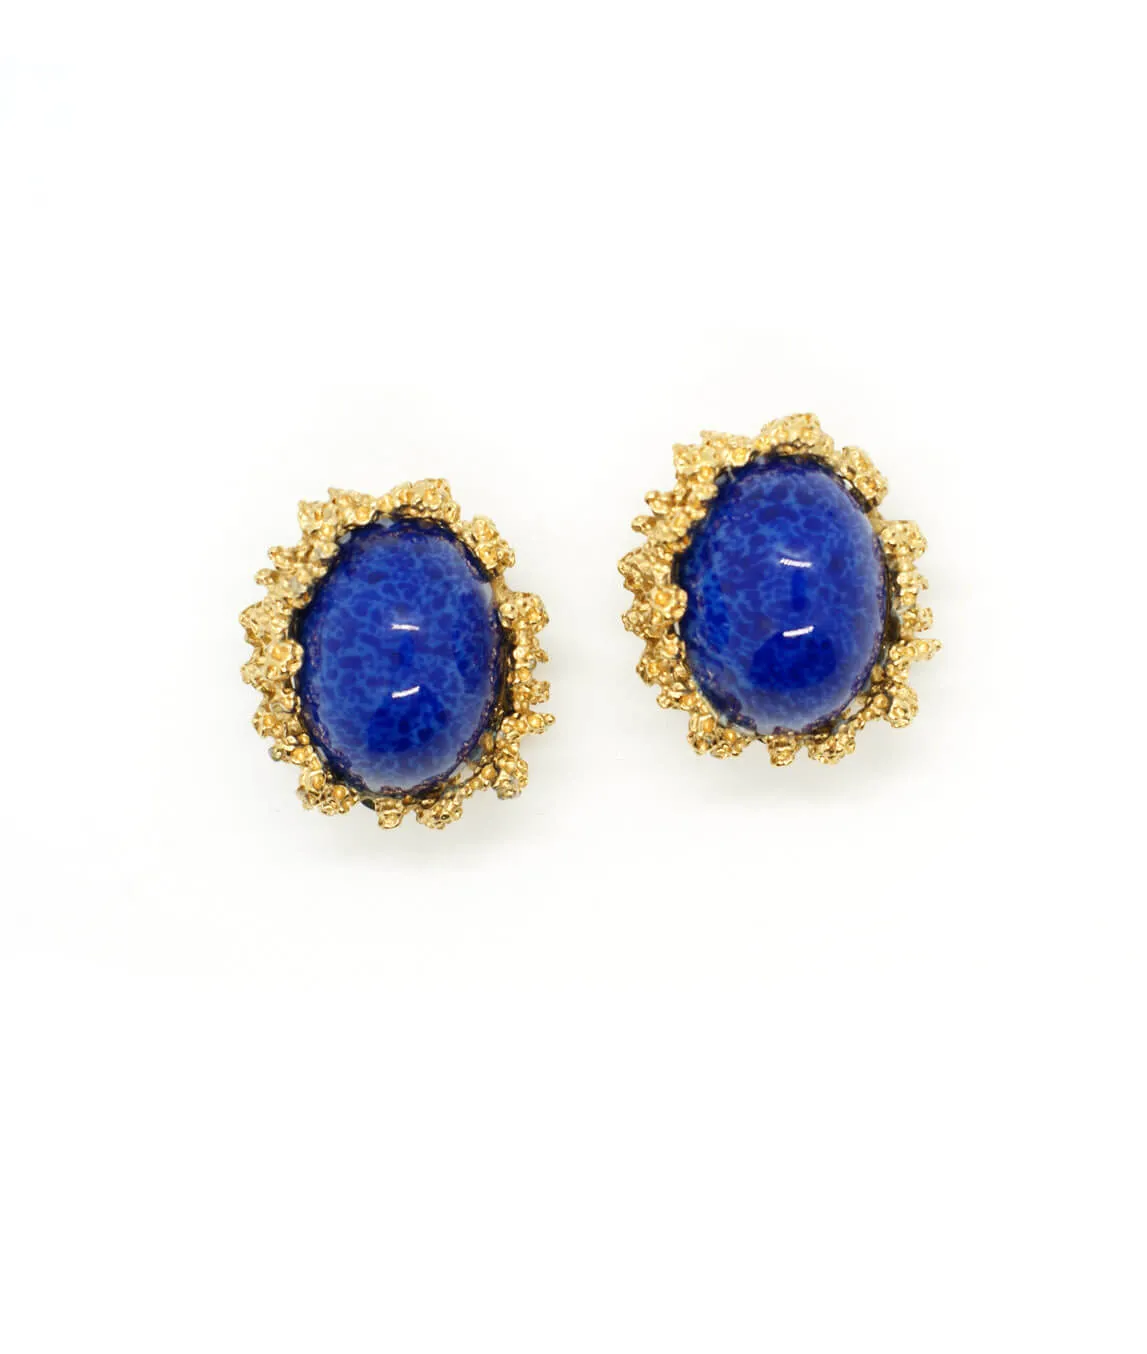 Lapis lazuli brutalist earrings